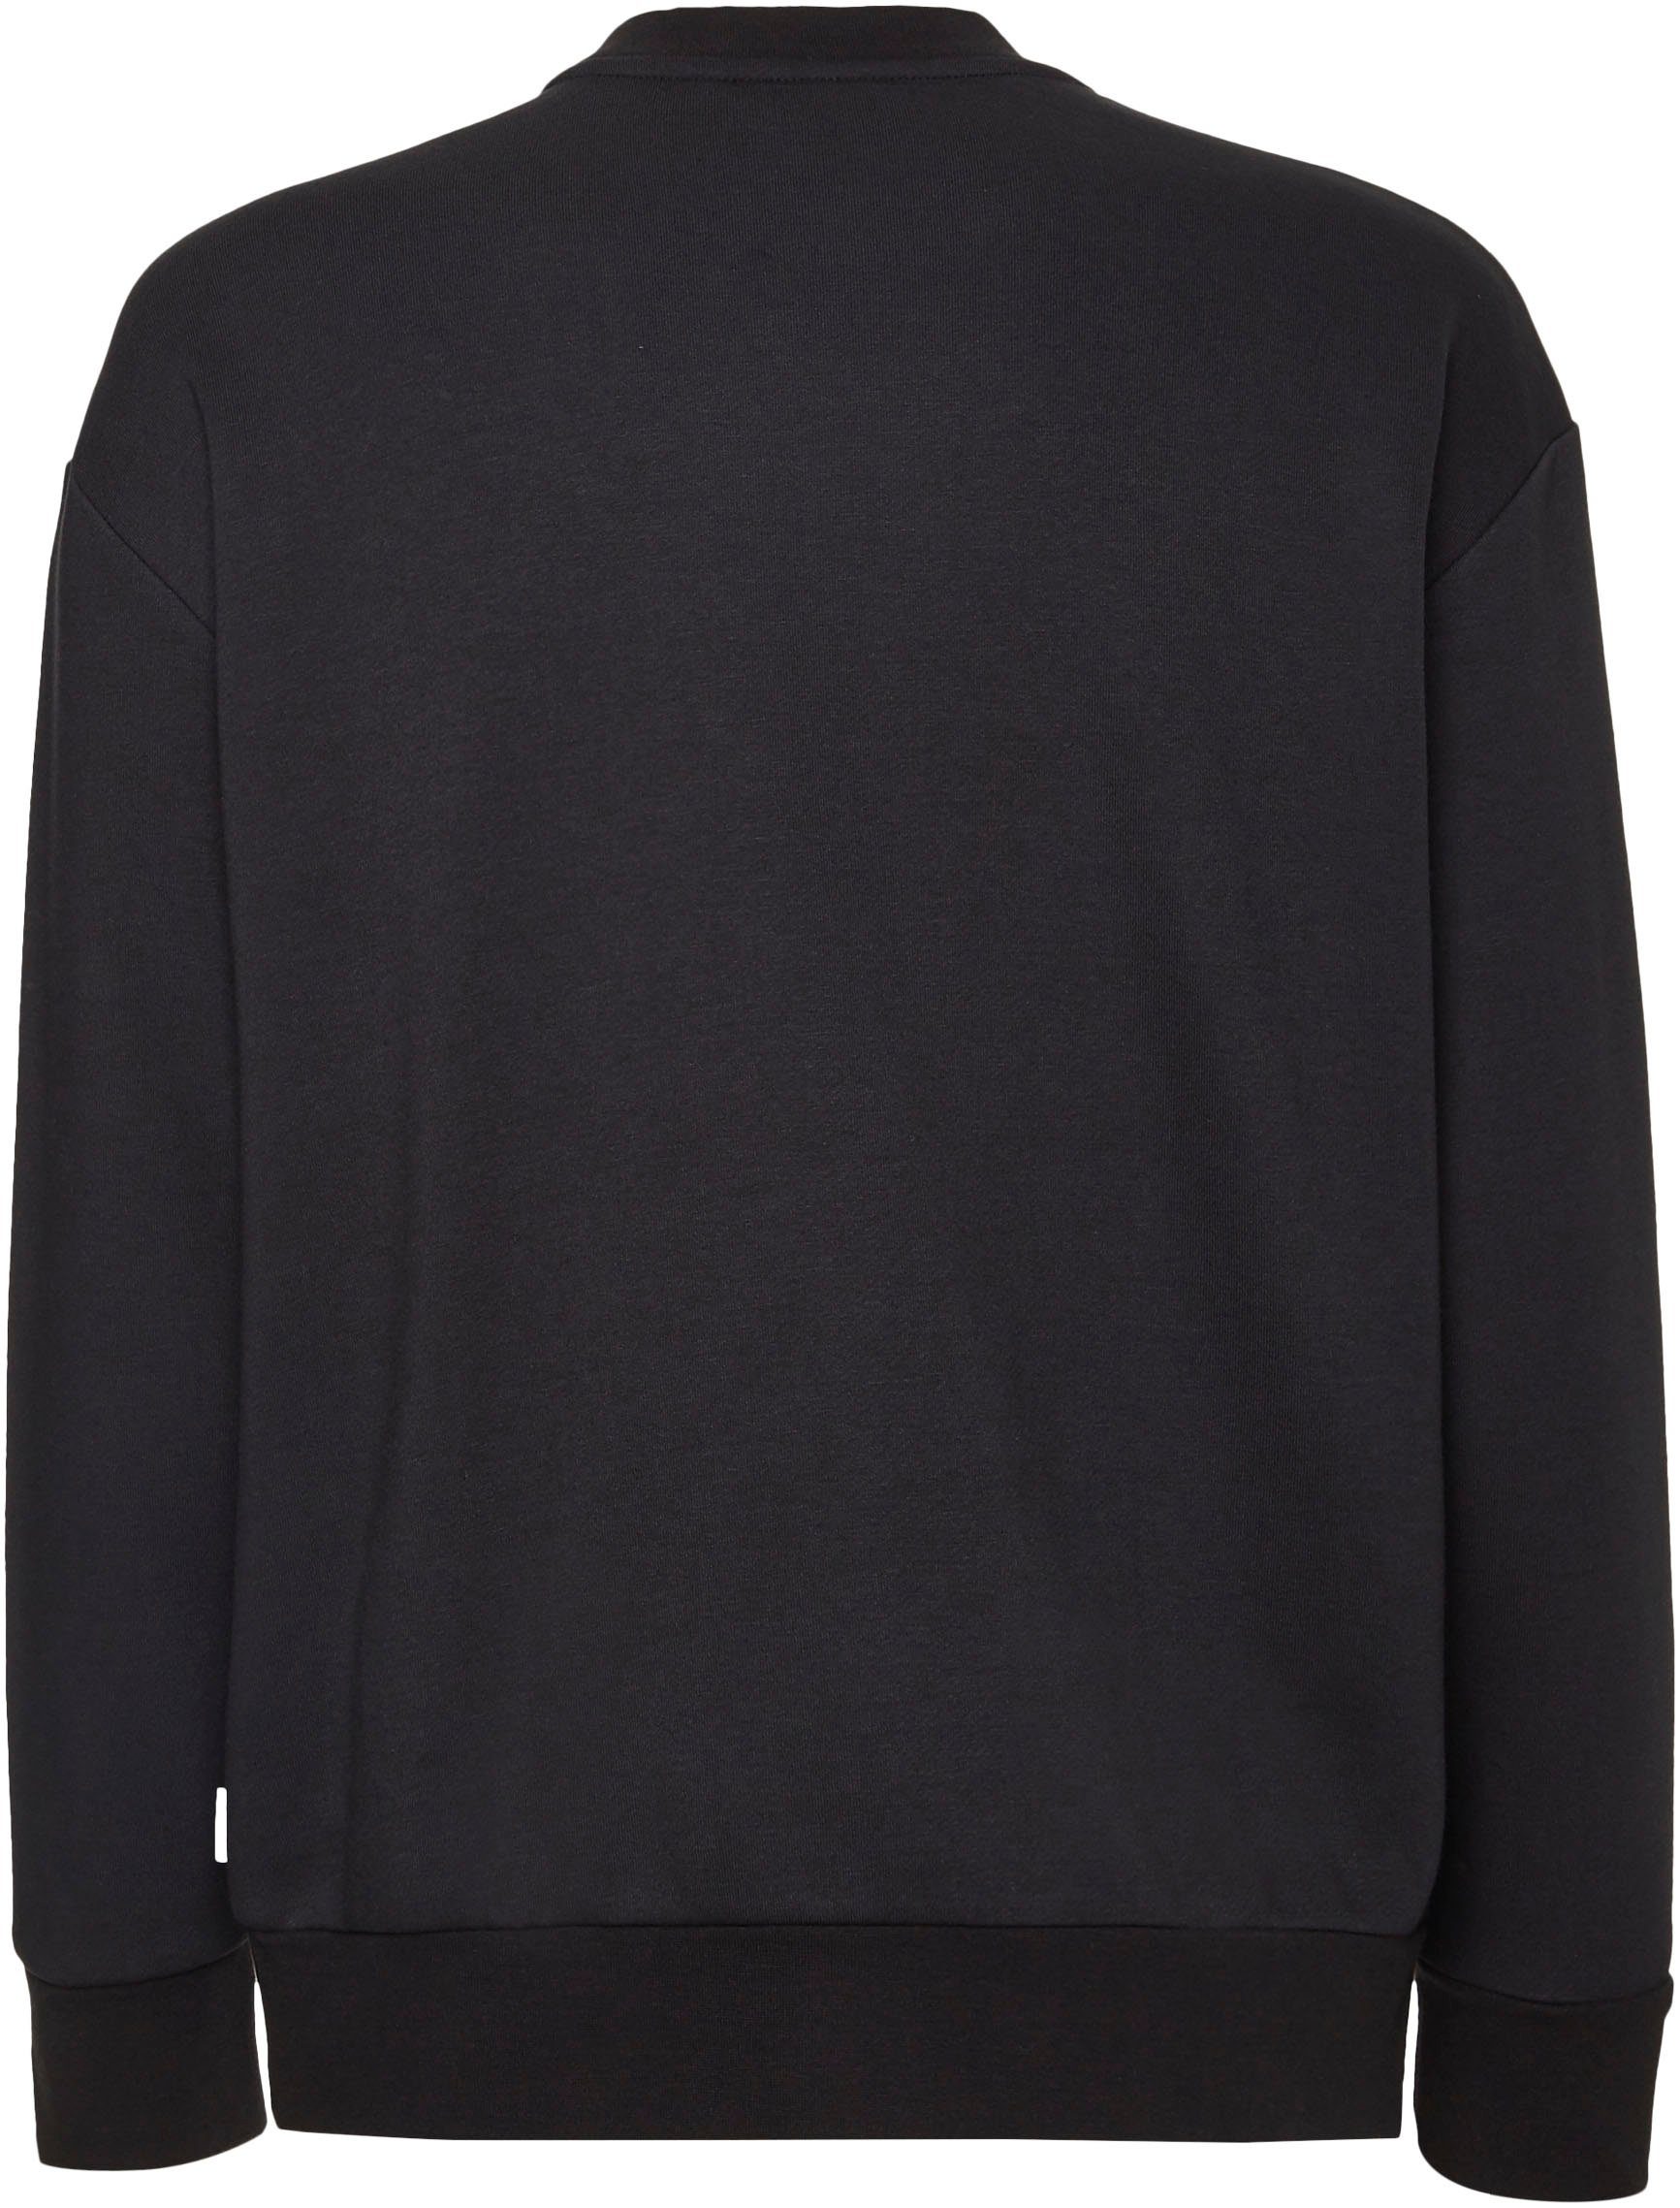 Calvin Klein Sweatshirt SWEATSHIRT COMFORT schwarz WORKWEAR